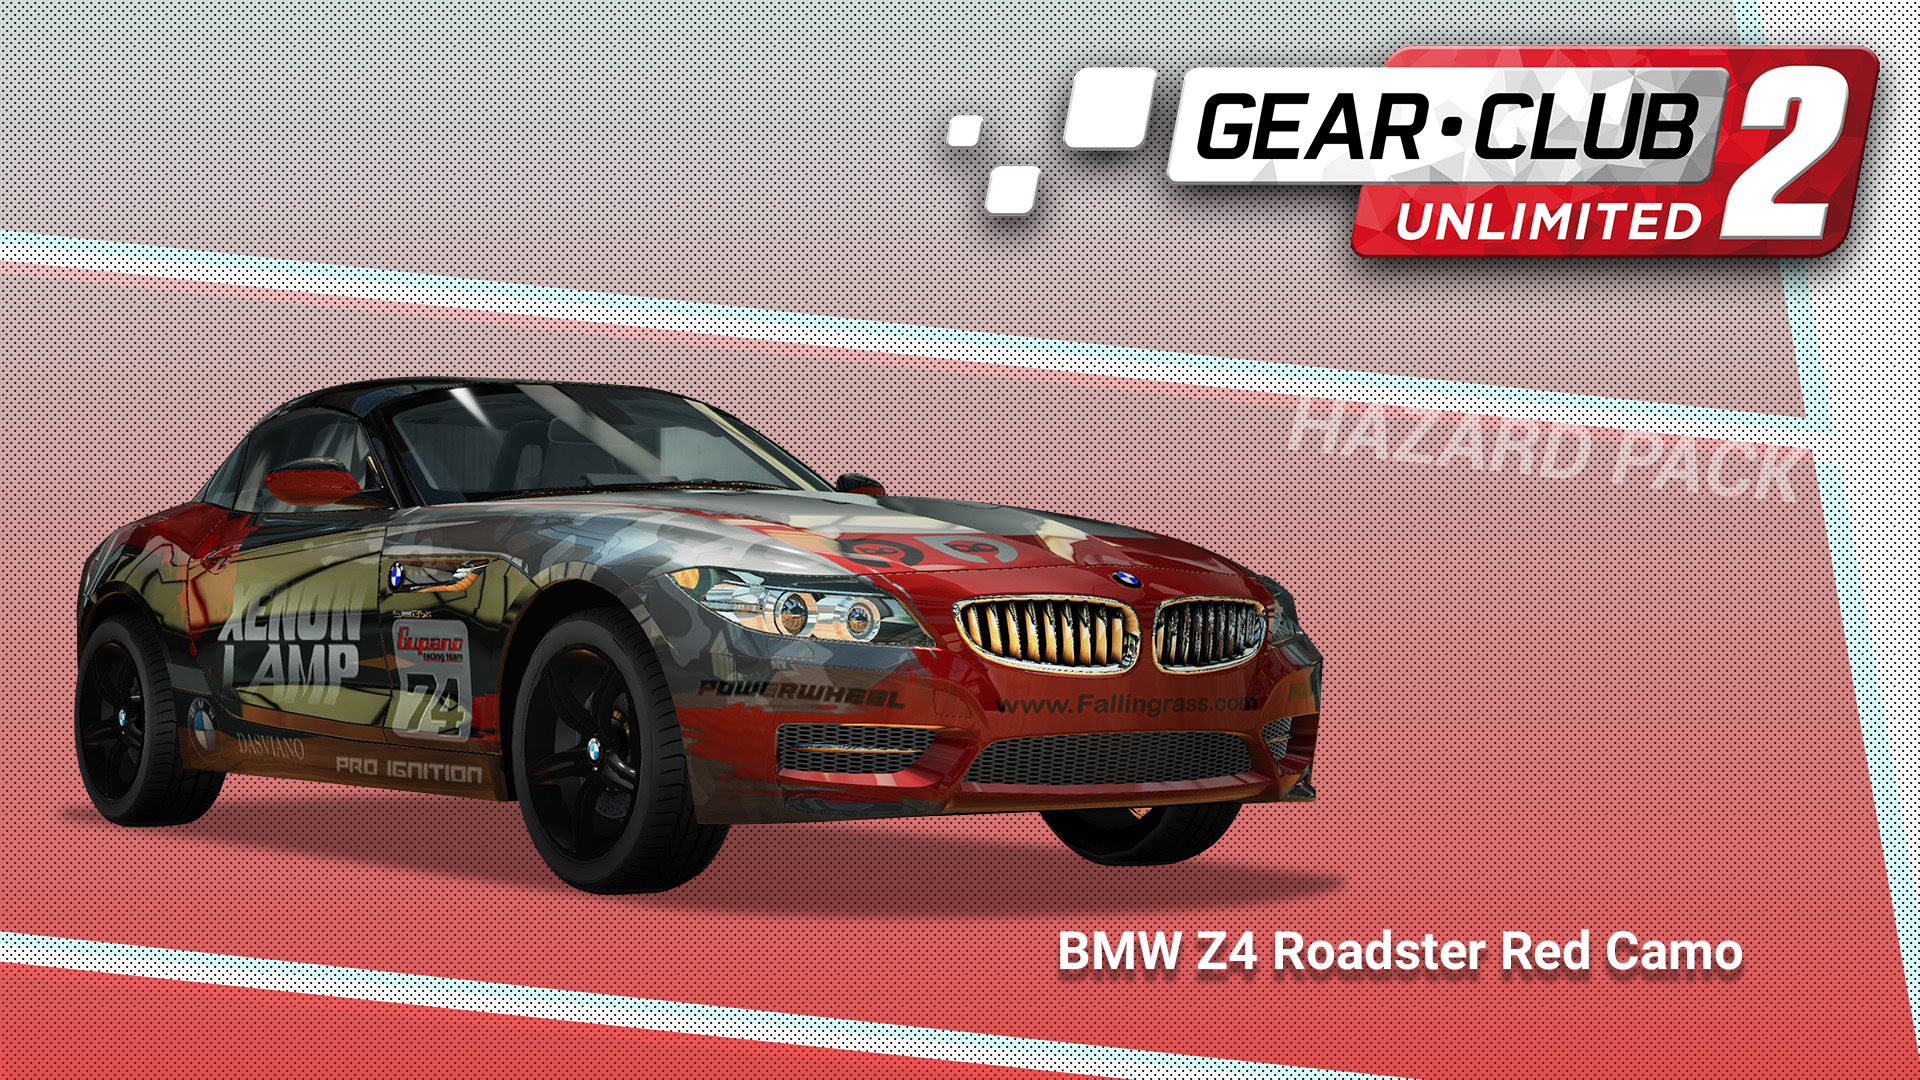 BMW Z4 Rodster Red Camo - Gear.Club Unlimited 2